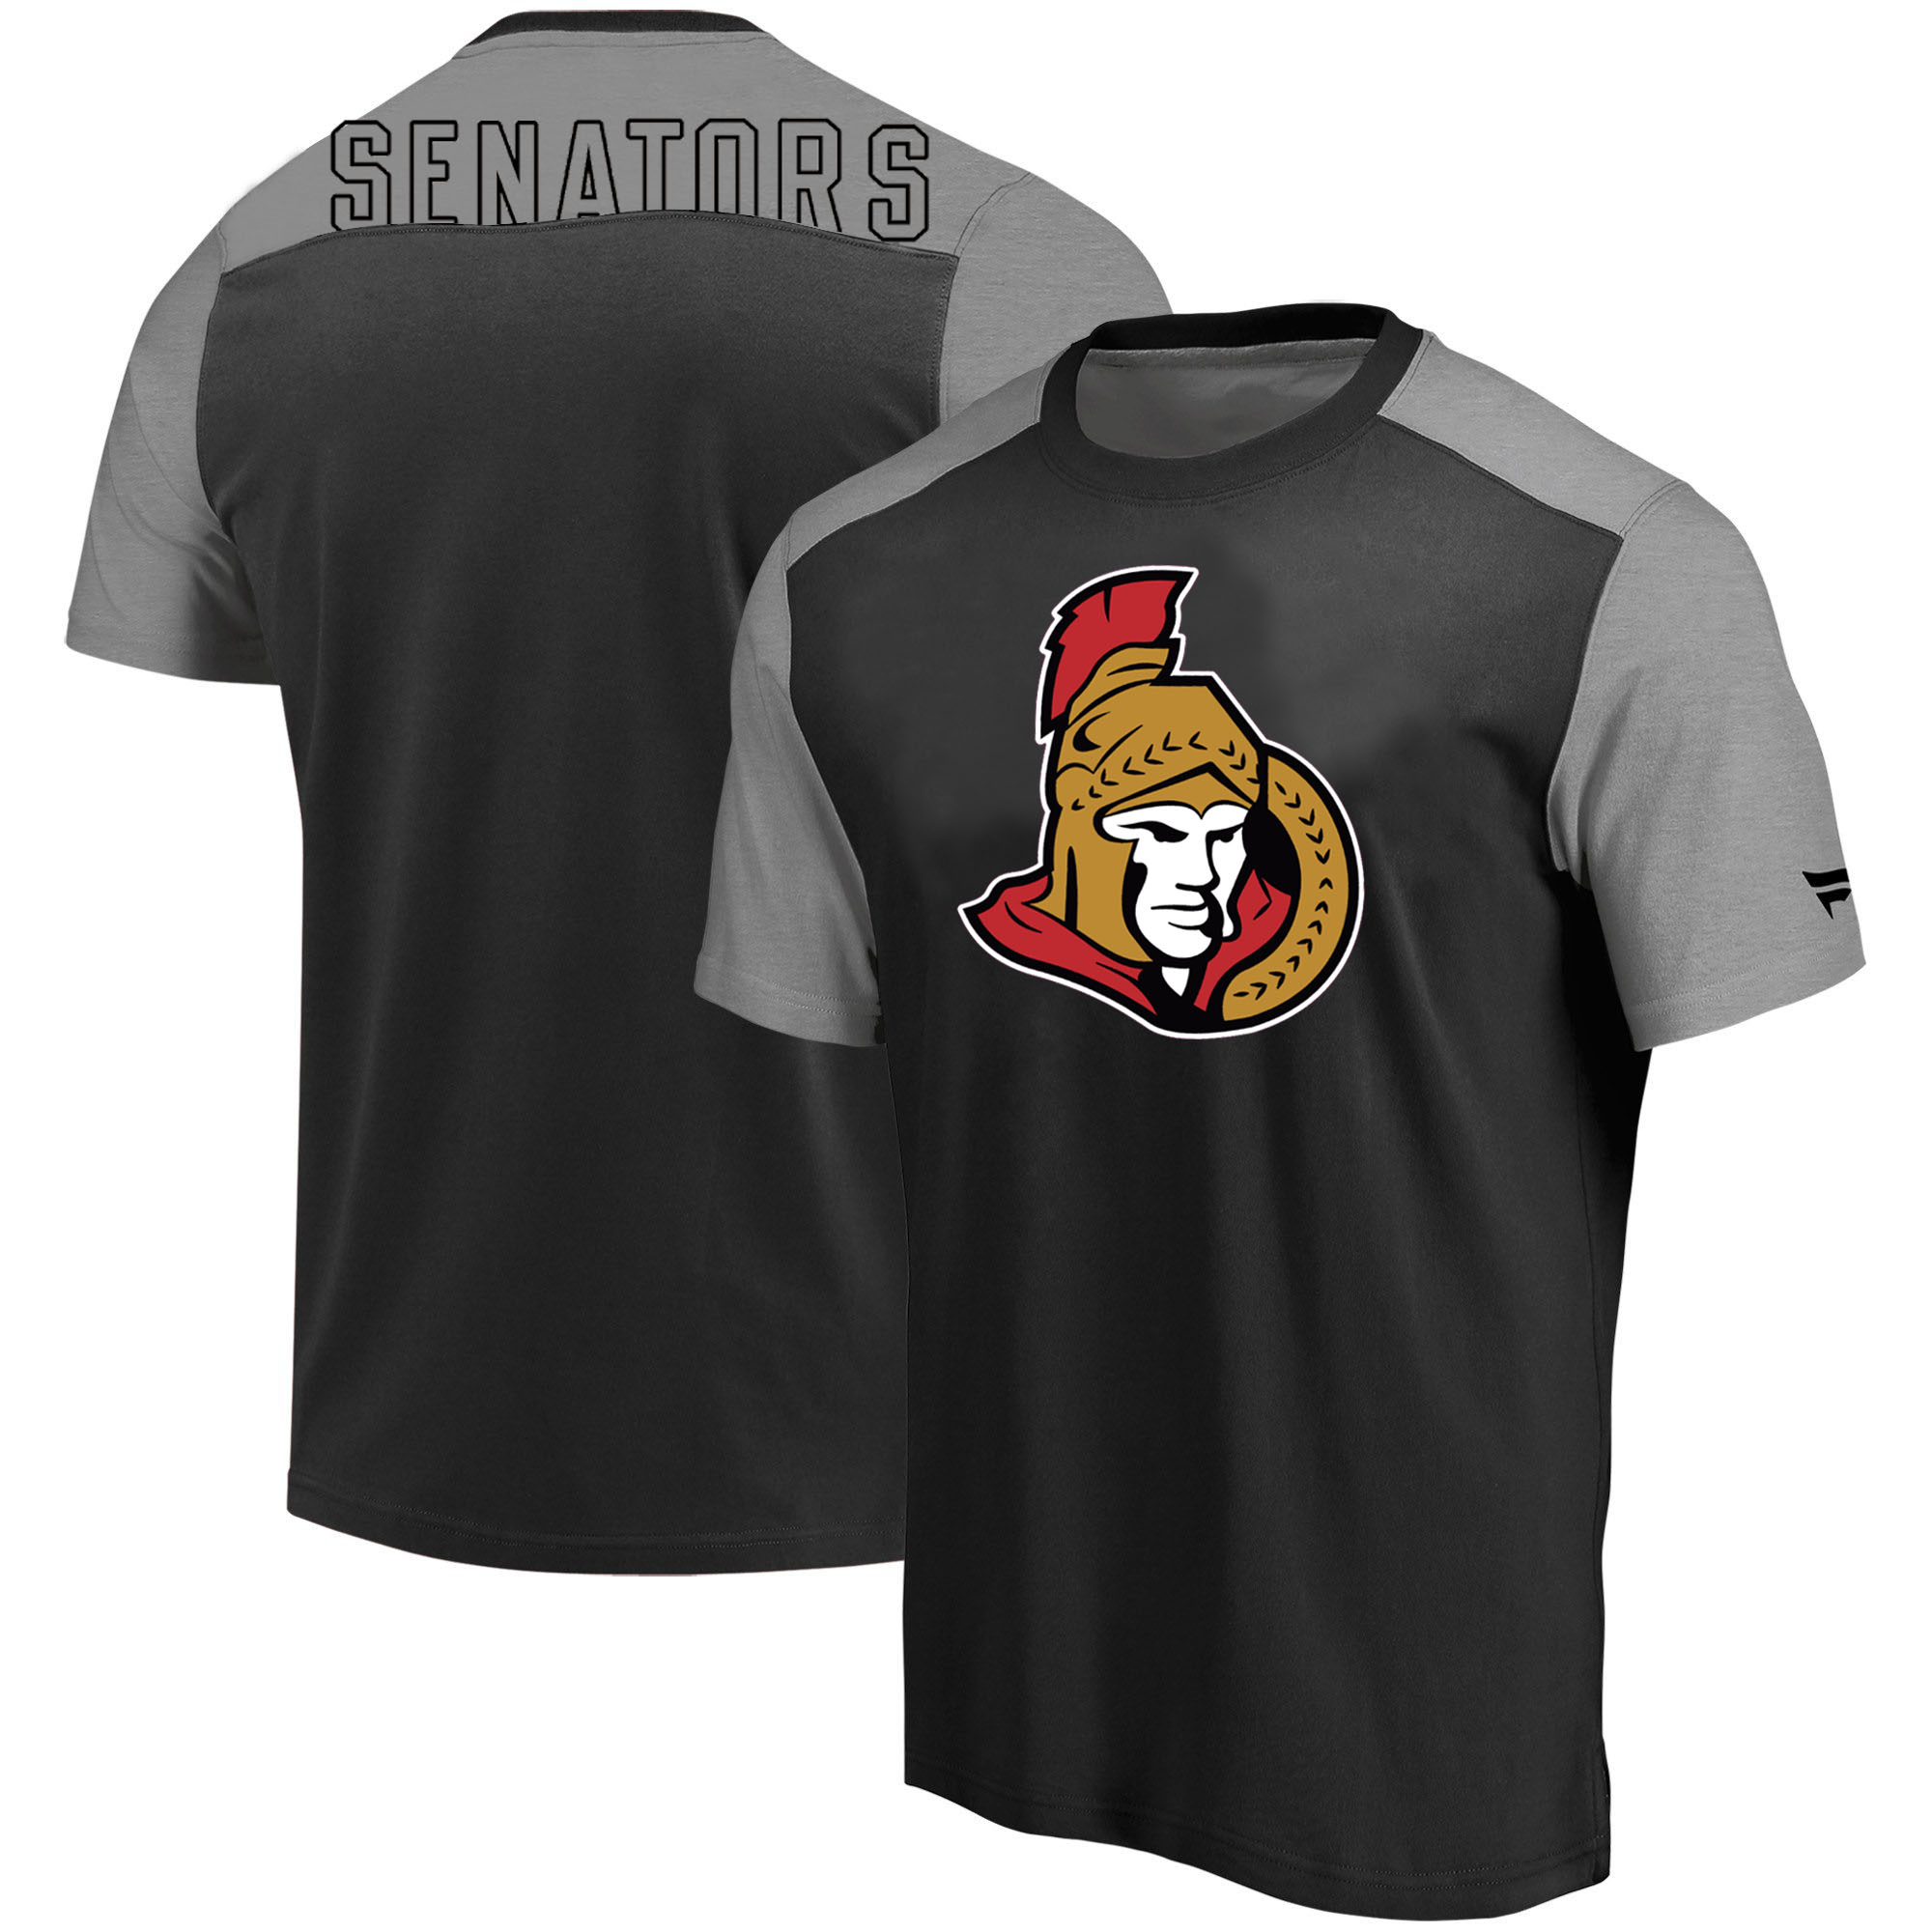 Ottawa Senators Fanatics Branded Iconic Blocked T-Shirt Black Heathered Gray